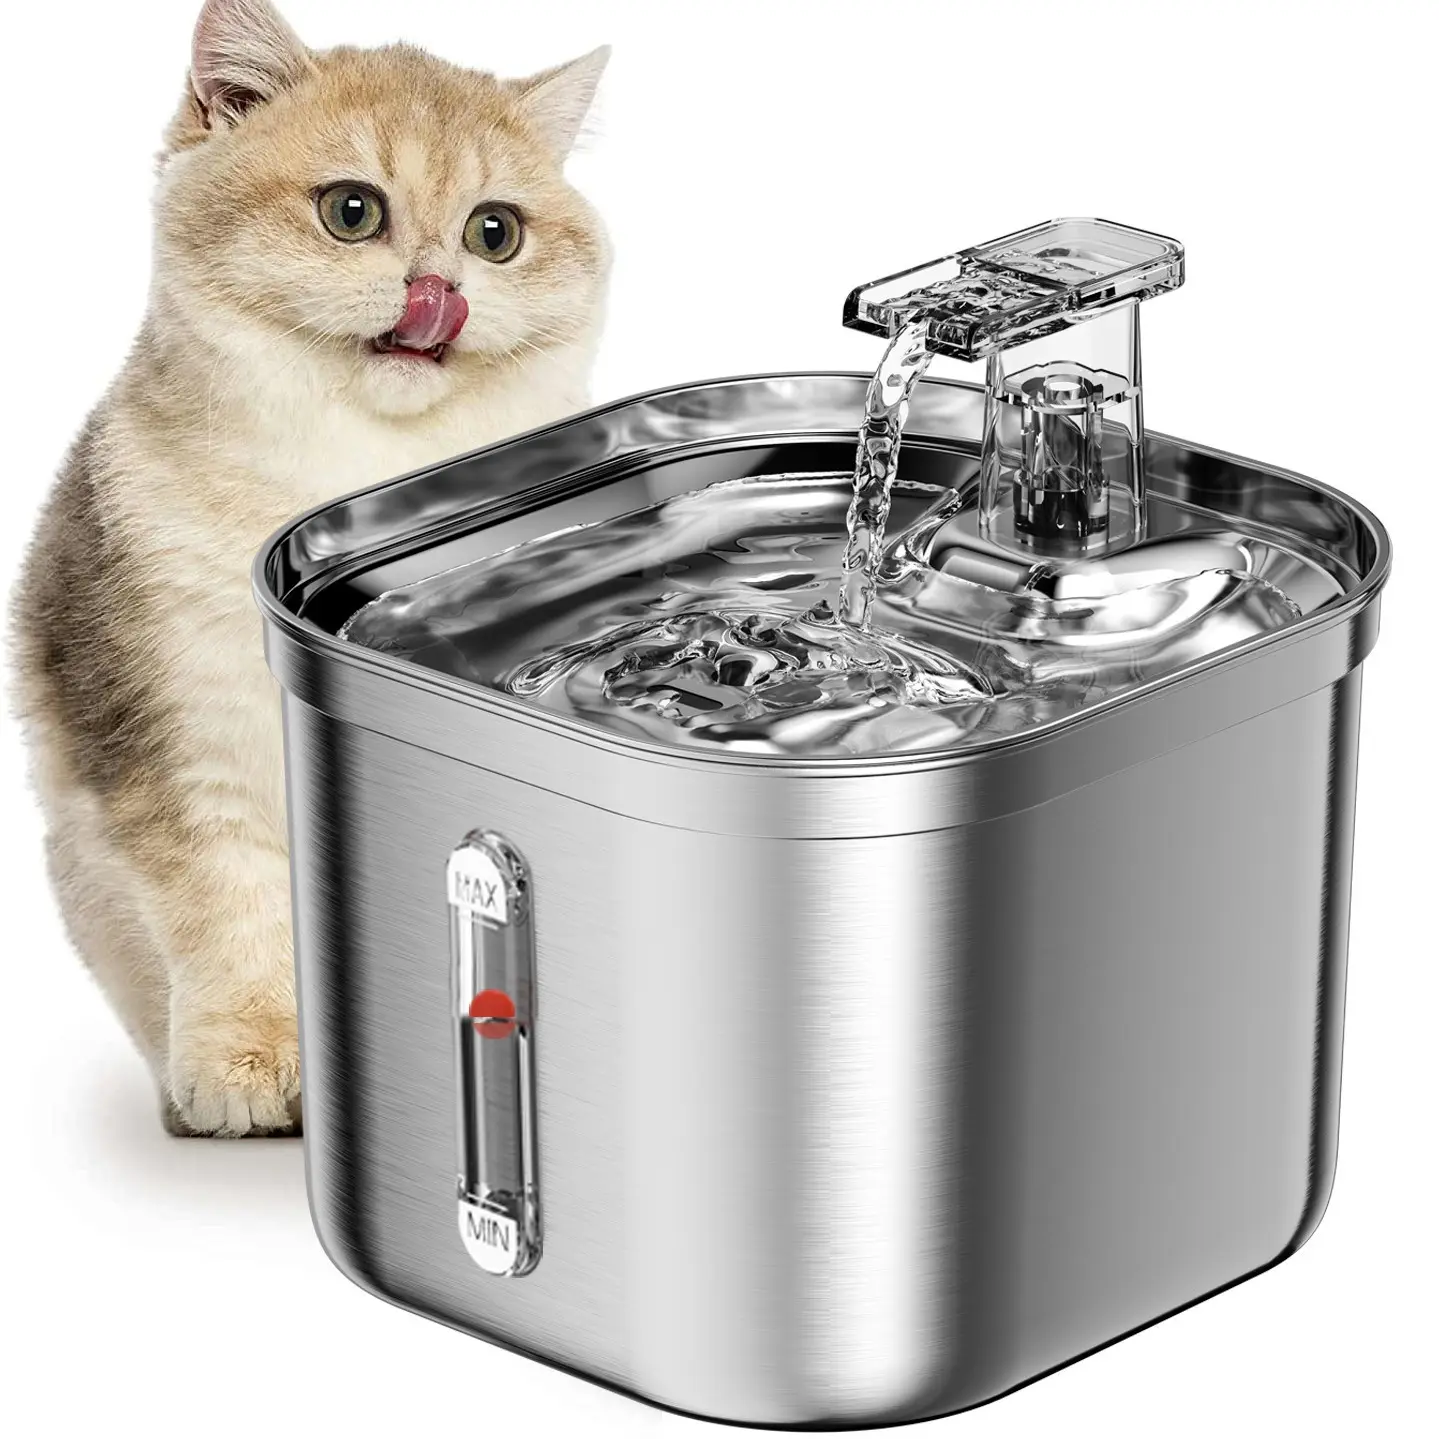 Fuente de acero inoxidable para gatos con marca de nivel de agua dispensador automático de agua para gatos 2.2L fuente de agua con bomba ultrasilenciosa para gatos domésticos